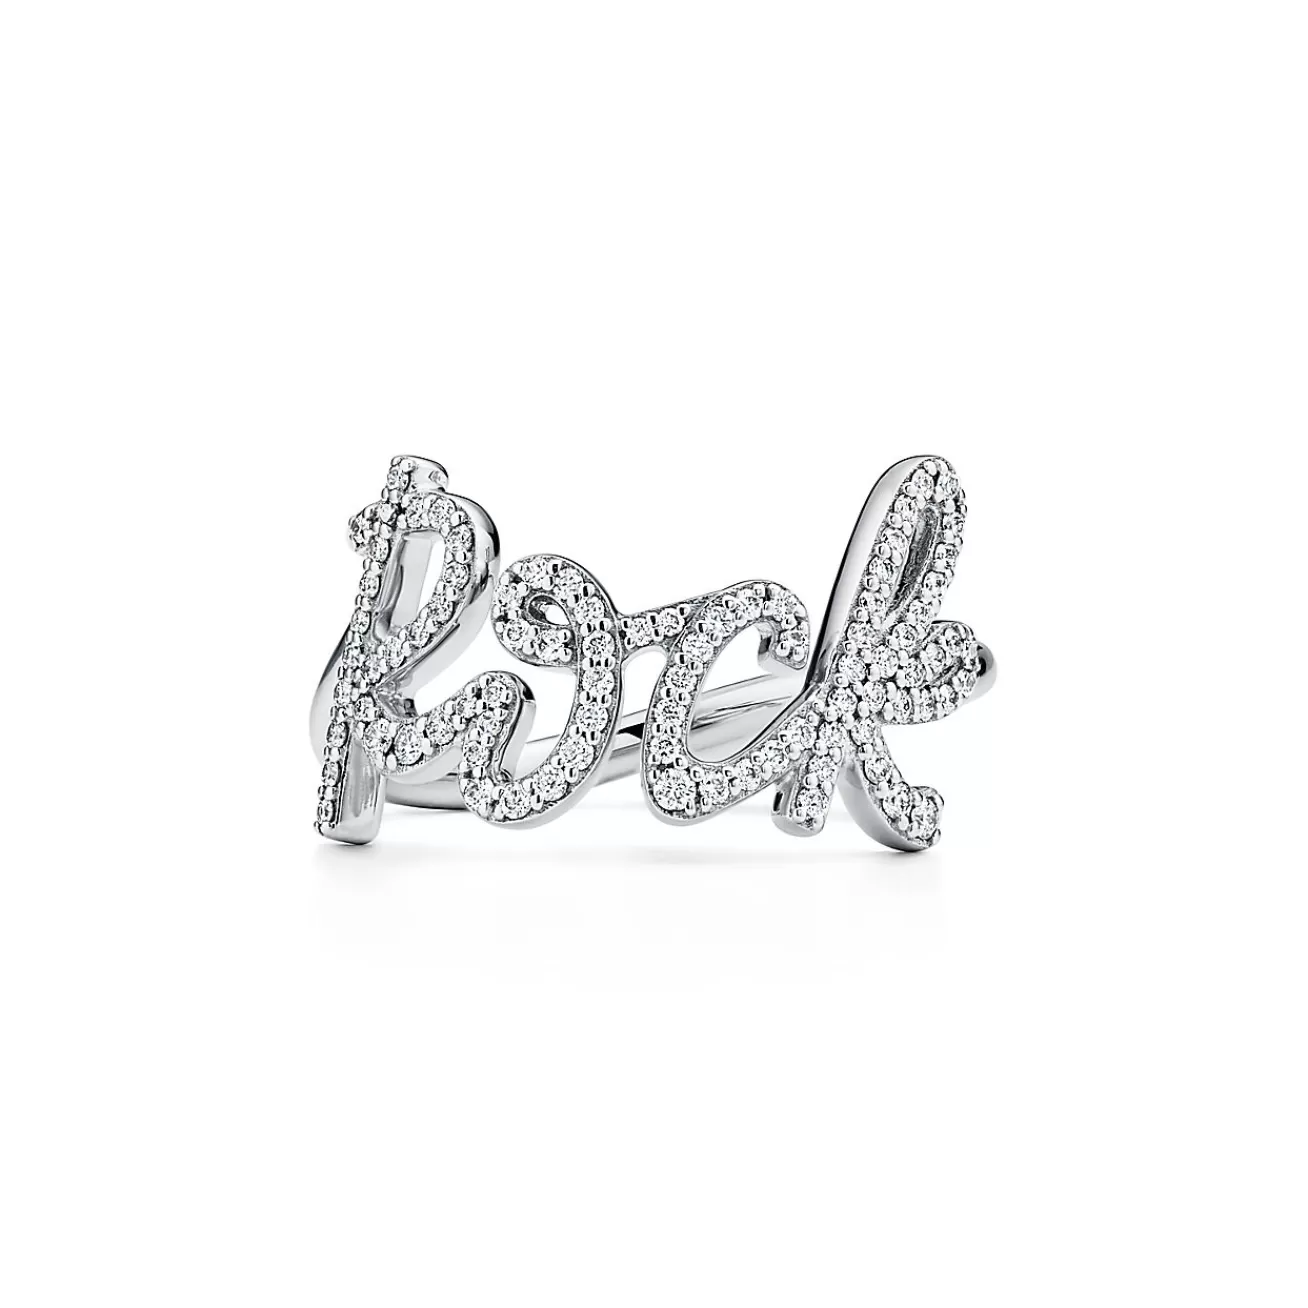 Tiffany & Co. Paloma's Graffiti Rock Ring in White Gold with Diamonds, Small | ^ Rings | Diamond Jewelry